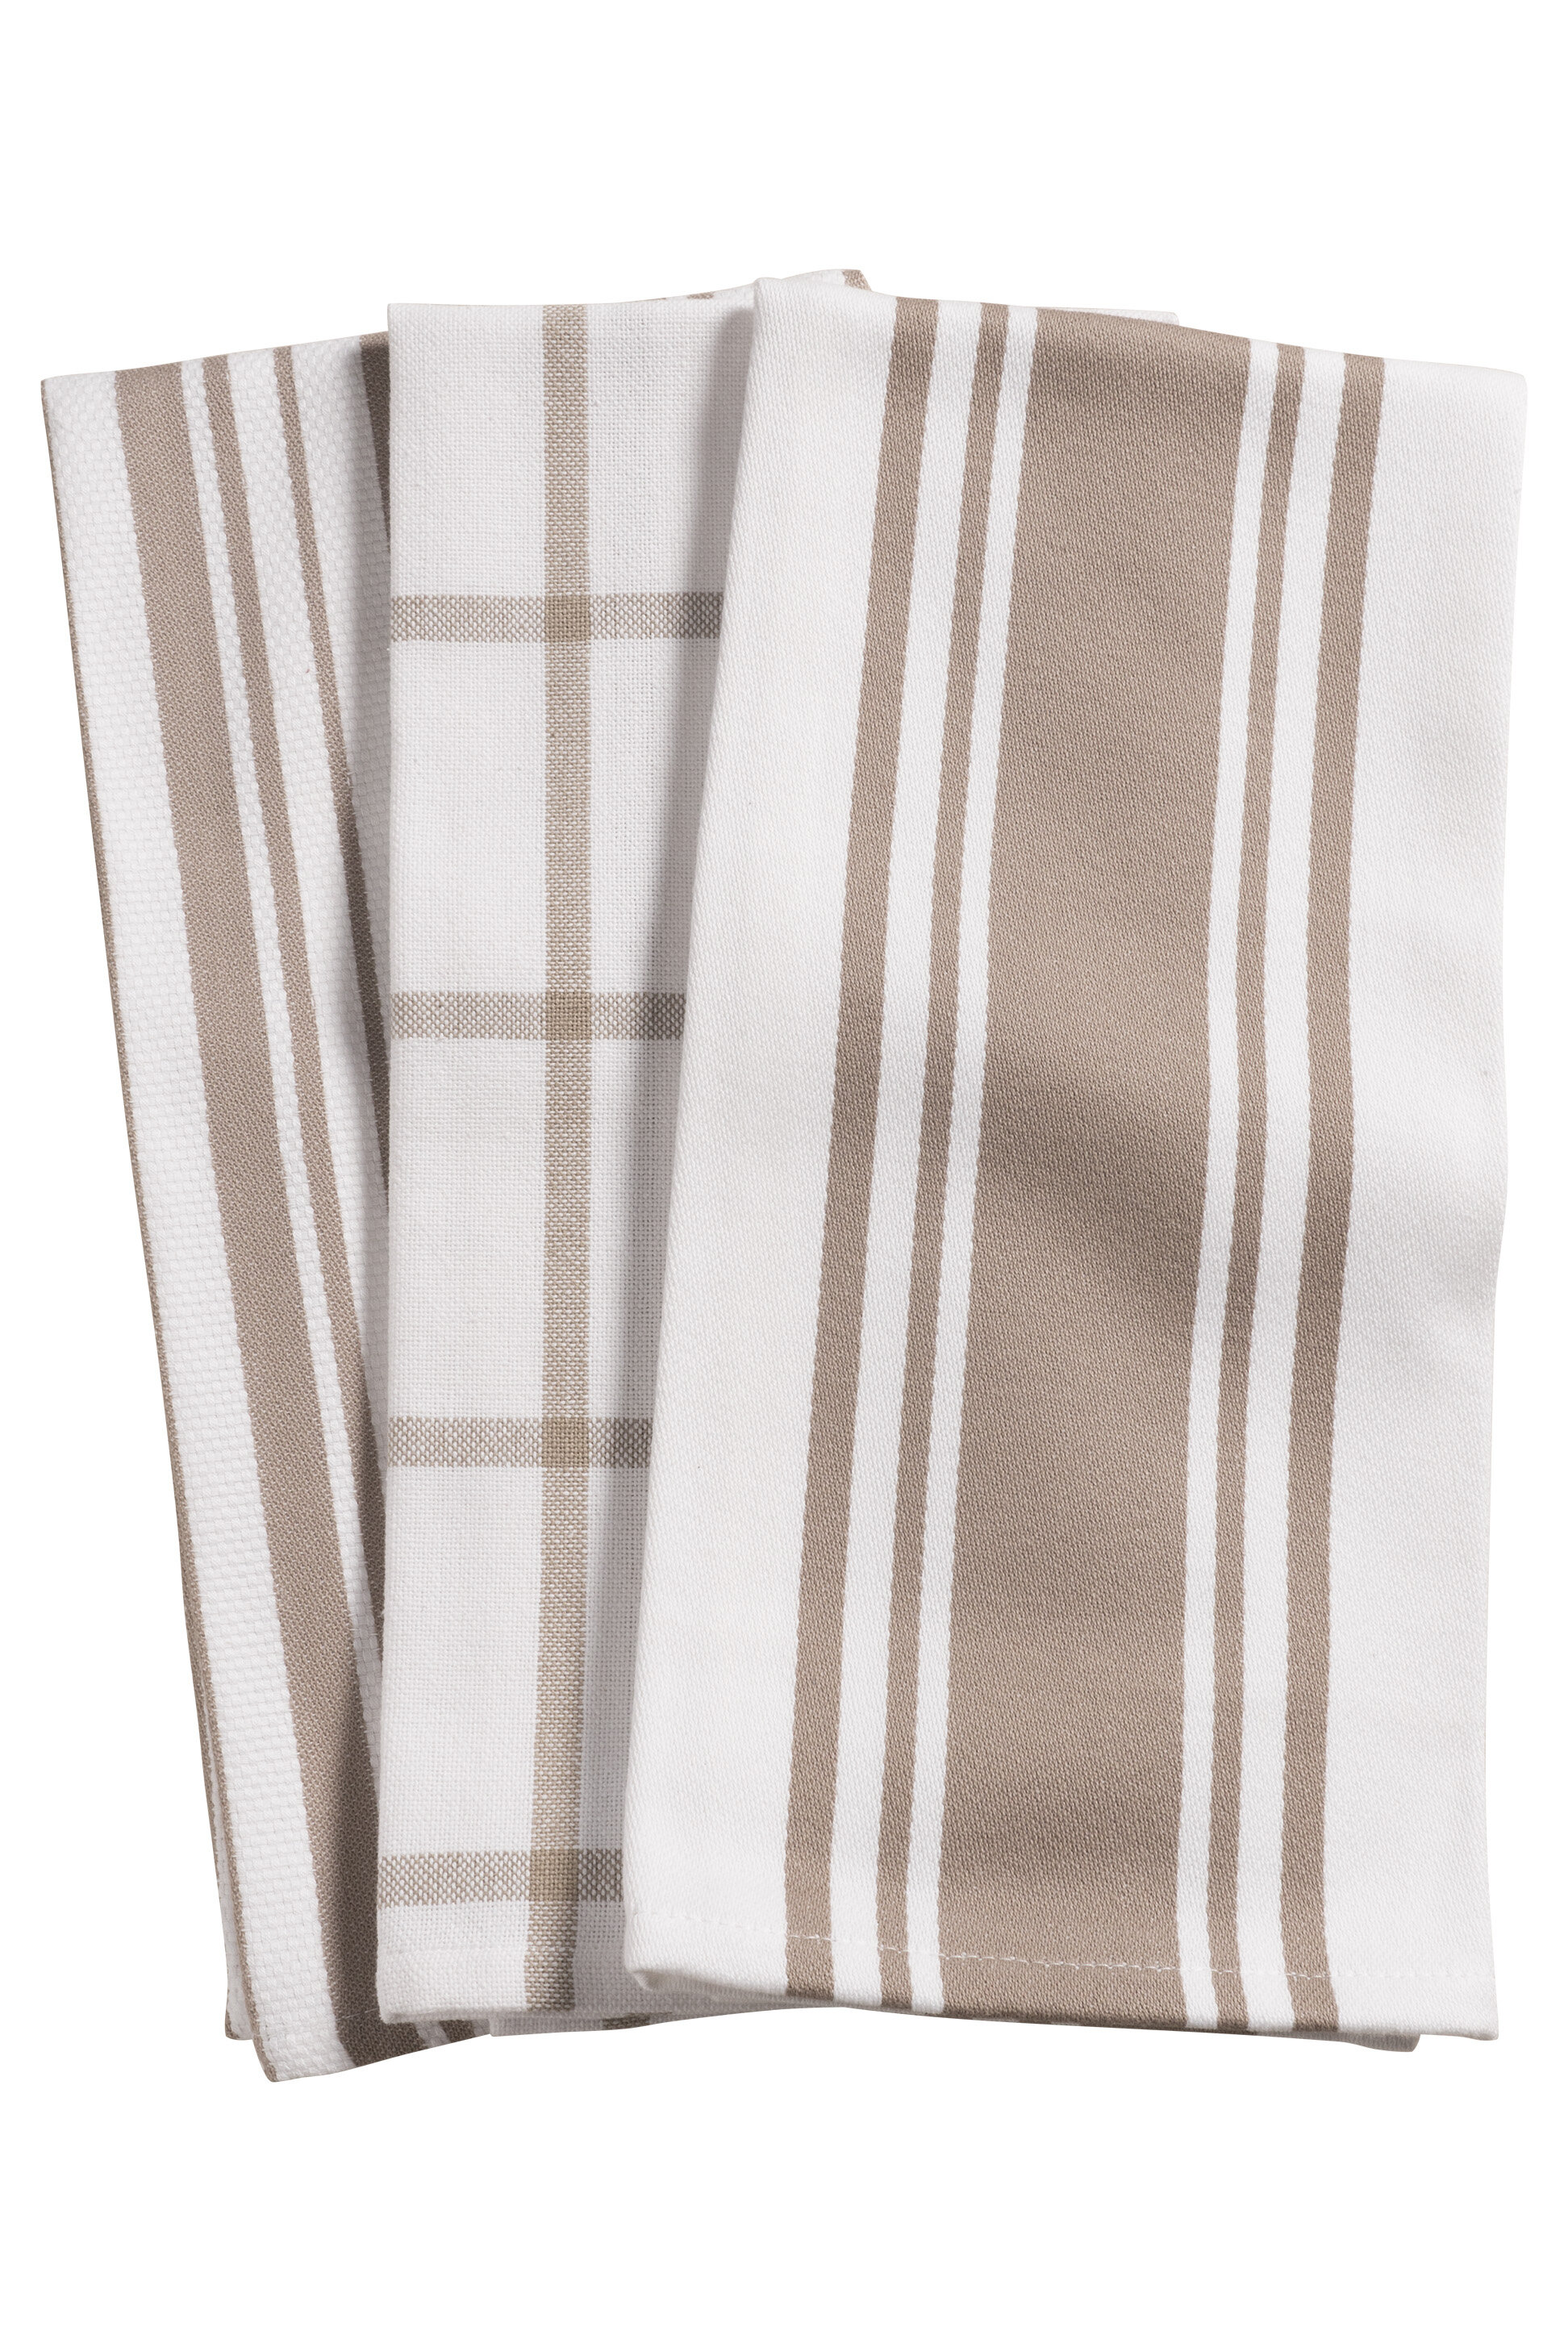 HALLOWEEN TIE TOWEL ASSORTMENT  15" x 16.5" 100% Cotton {Your Choice}